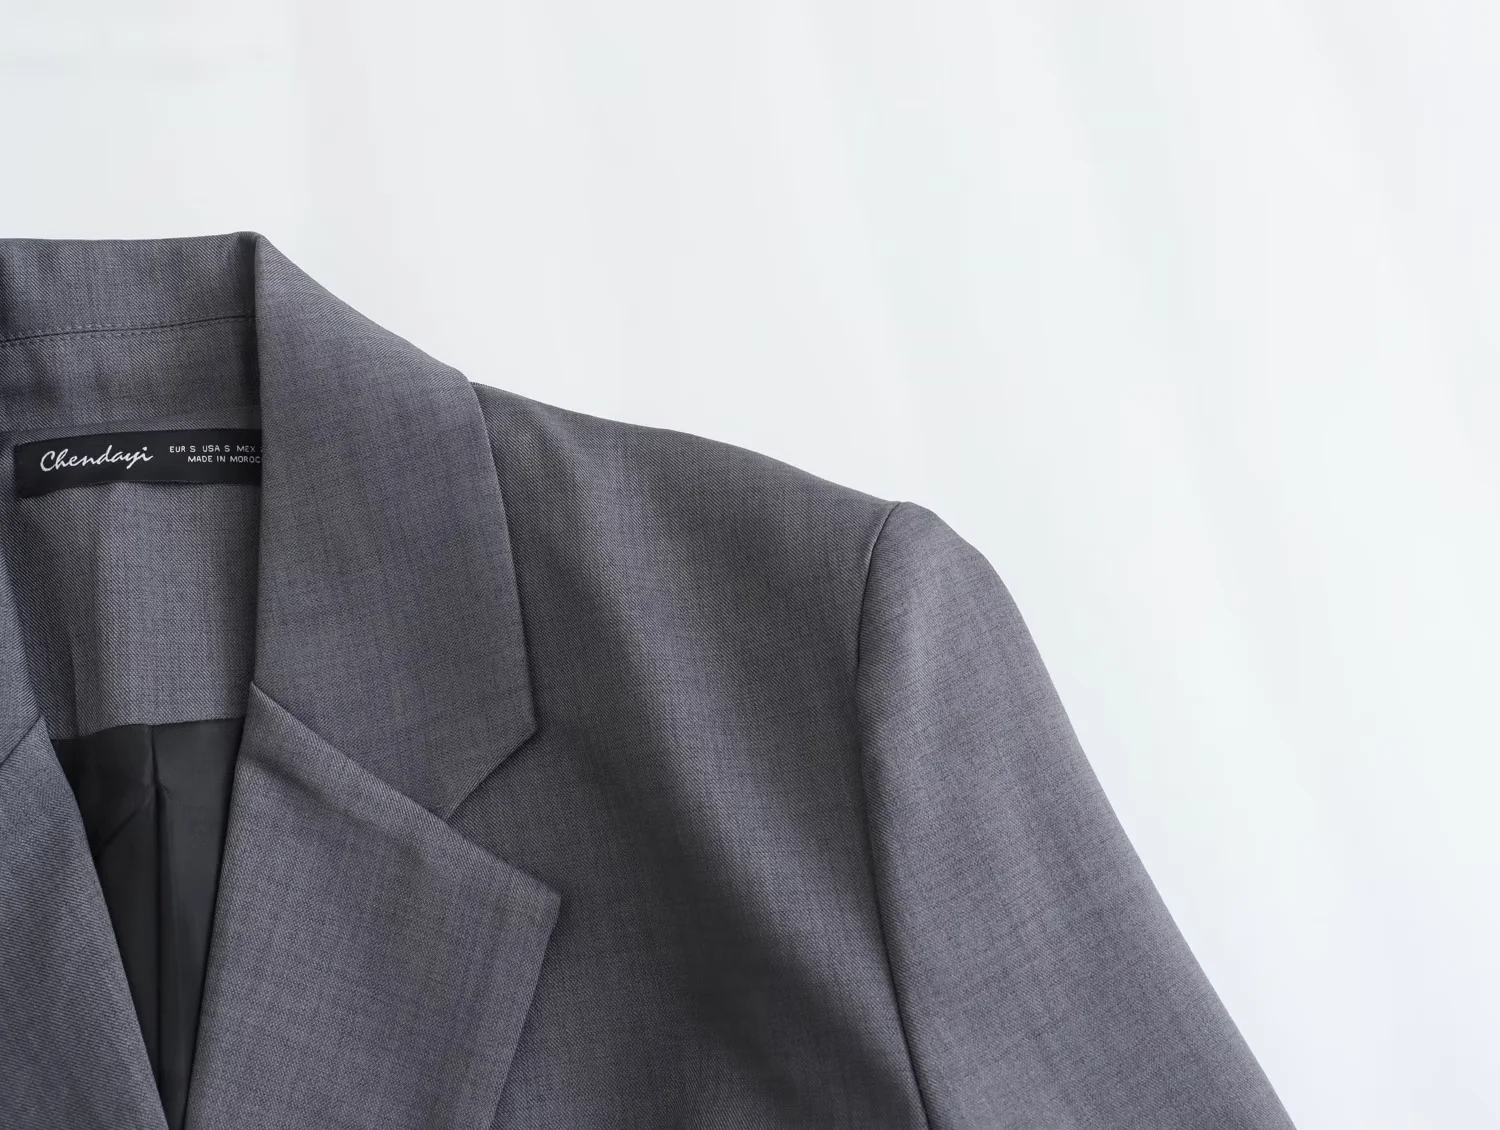 Fashion Grey Blended Lapel Pocket Blazer,Suits